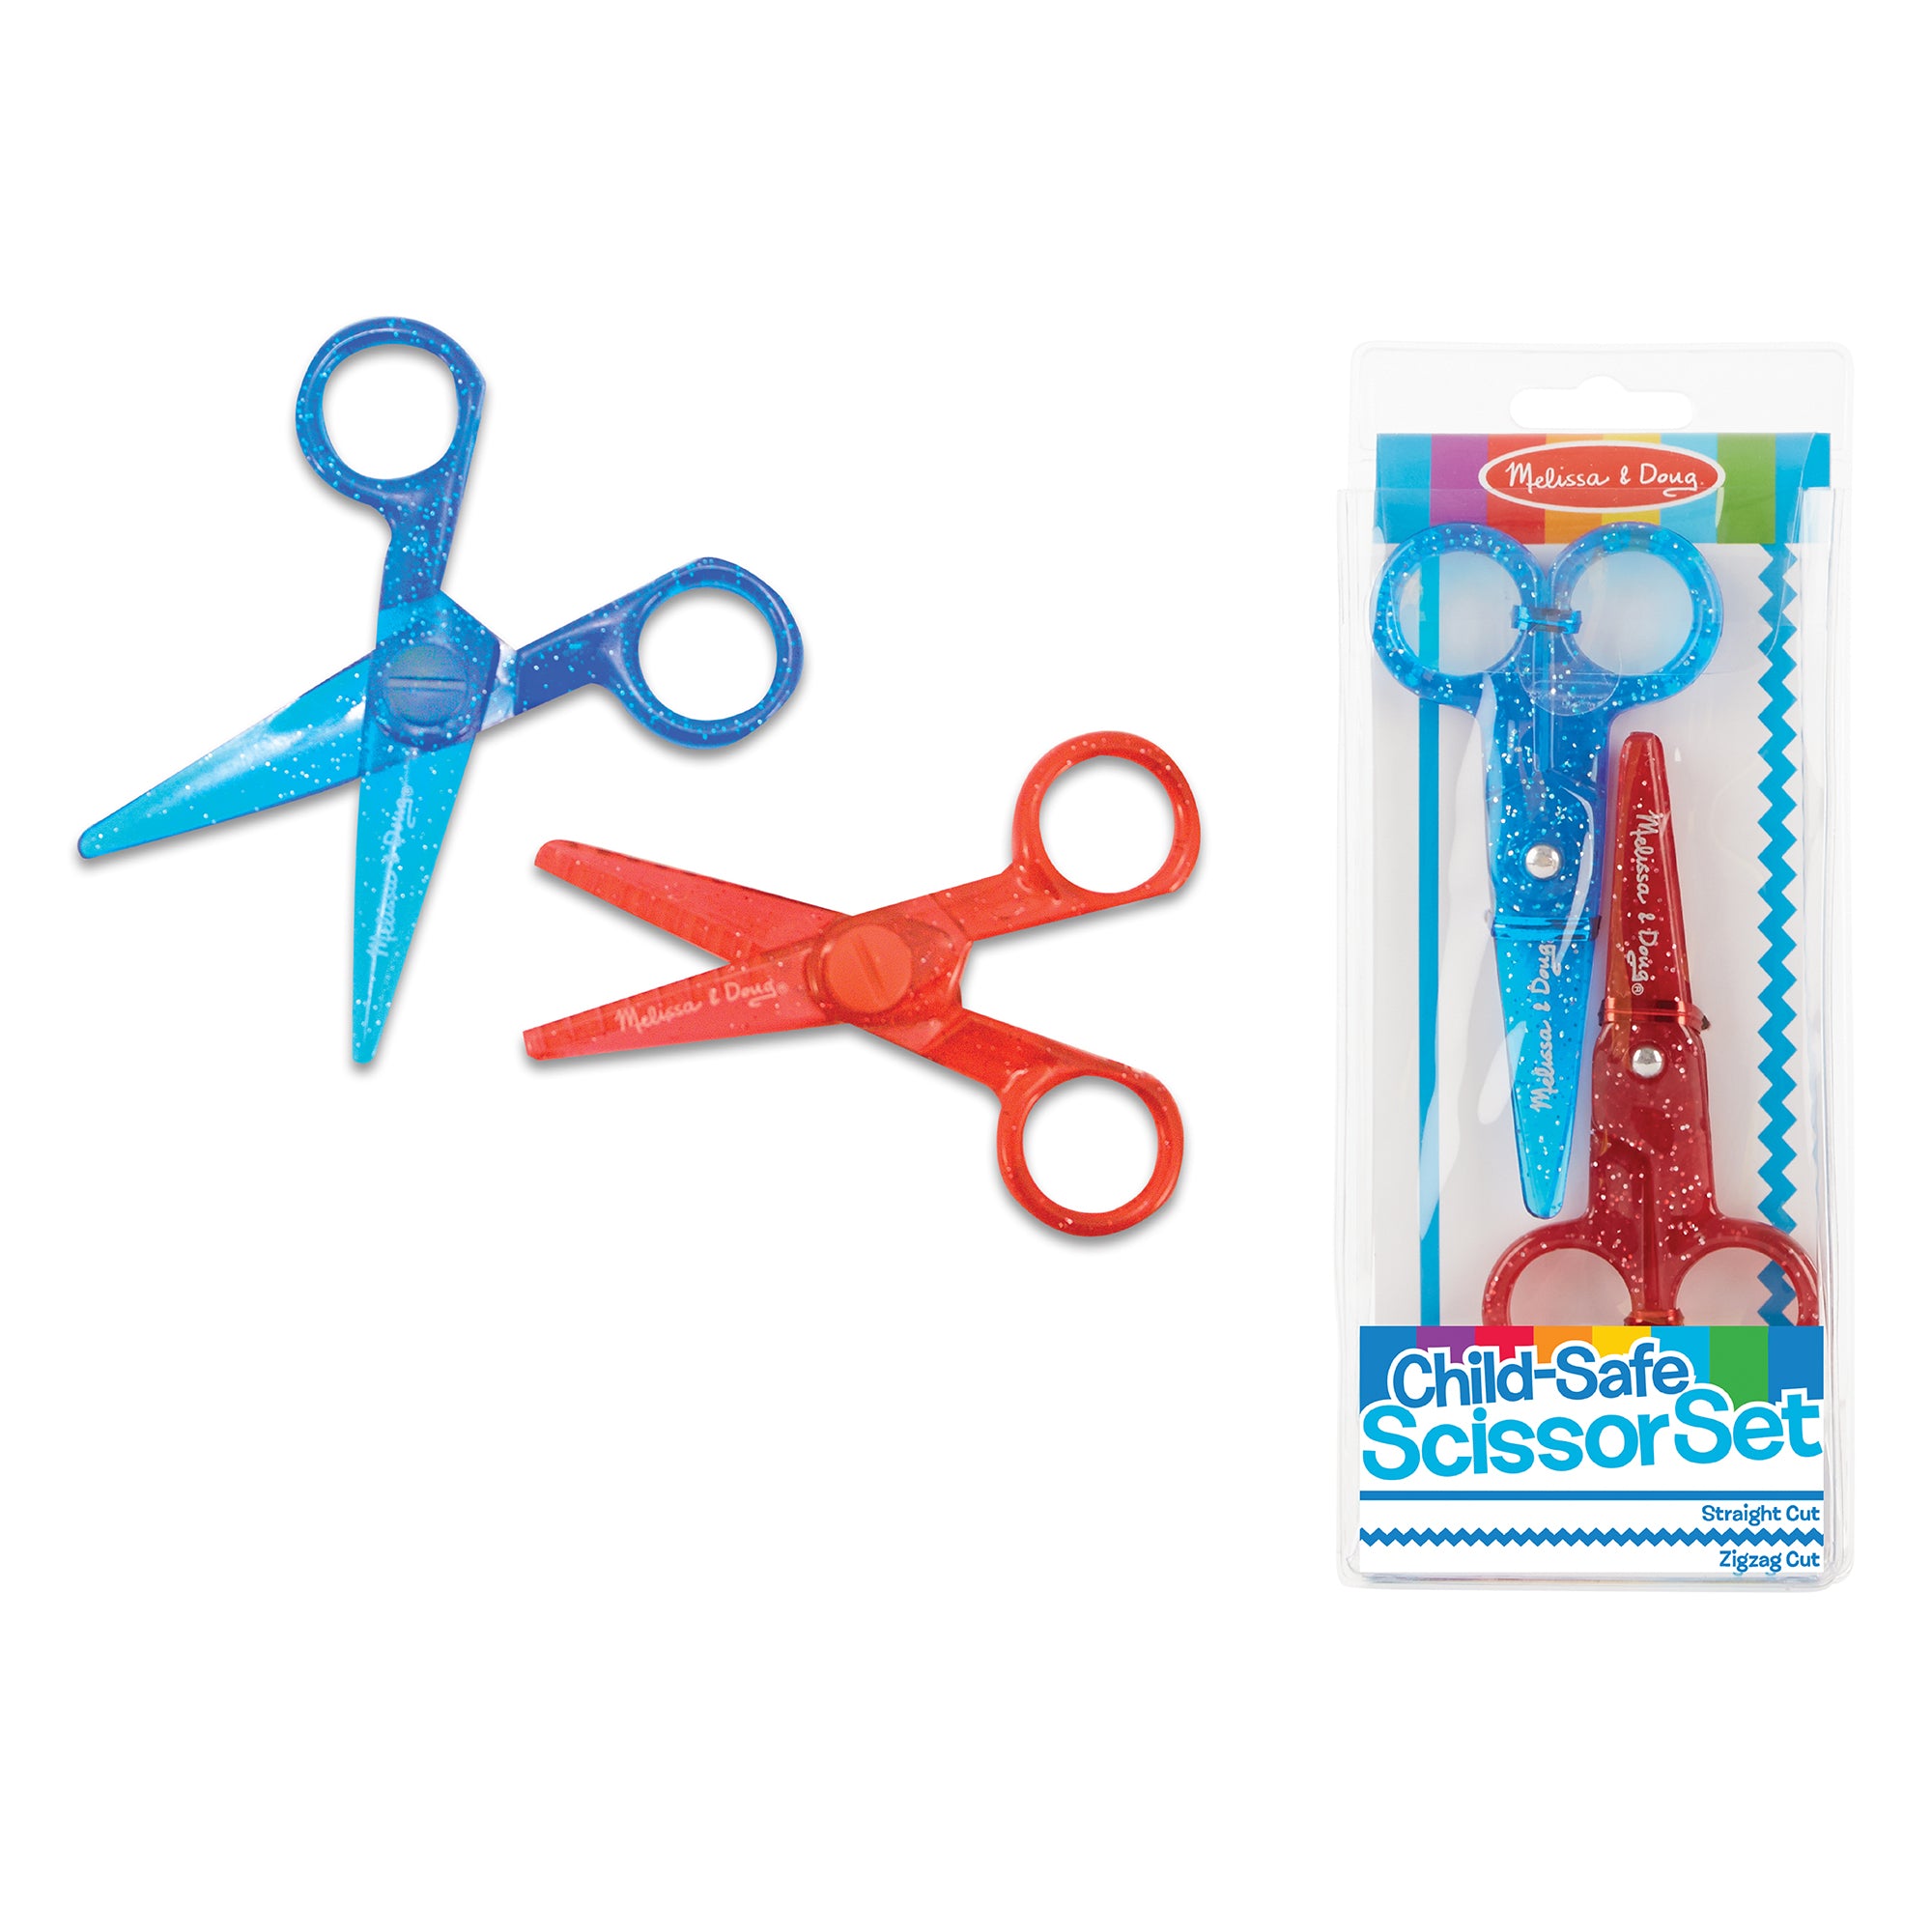 Child-Safe Scissors Set